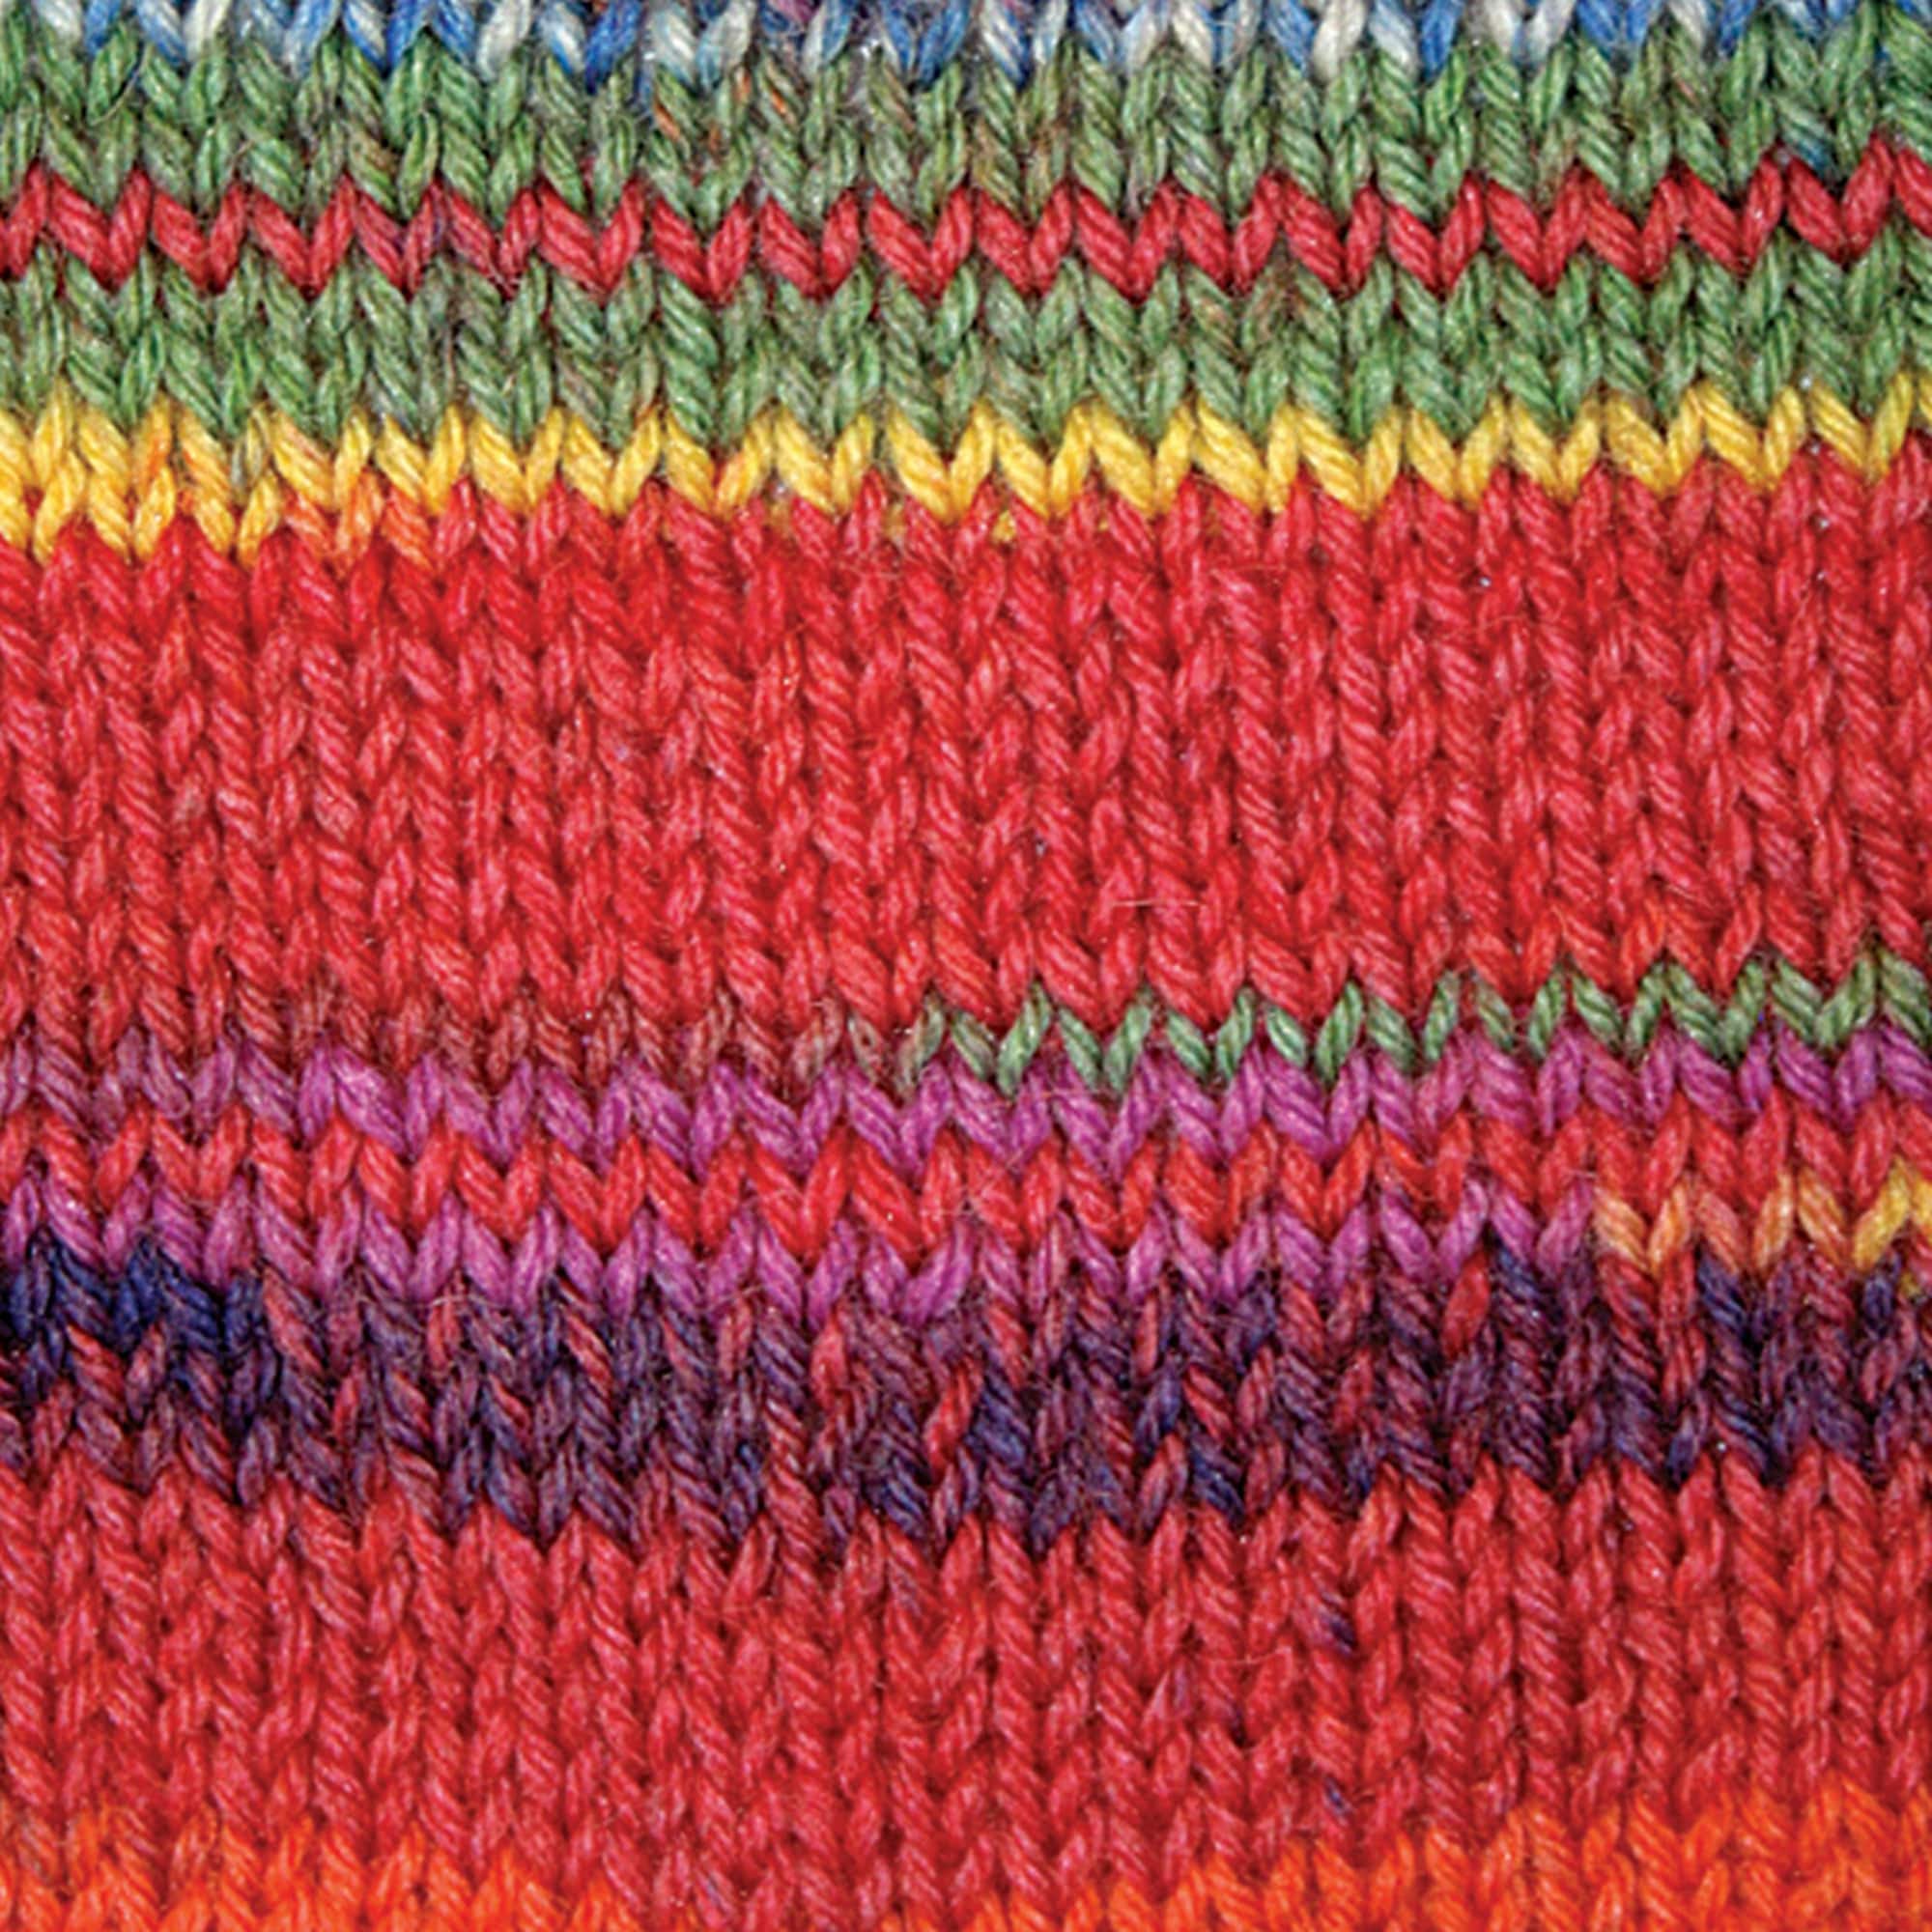 AMETHYST STRIPES Patons Kroy Socks Yarn is 1.75oz 166yds Super Fine Weight 1  Sock Yarn. A Blend of 75/25% Wool/nylon 50g 152m 